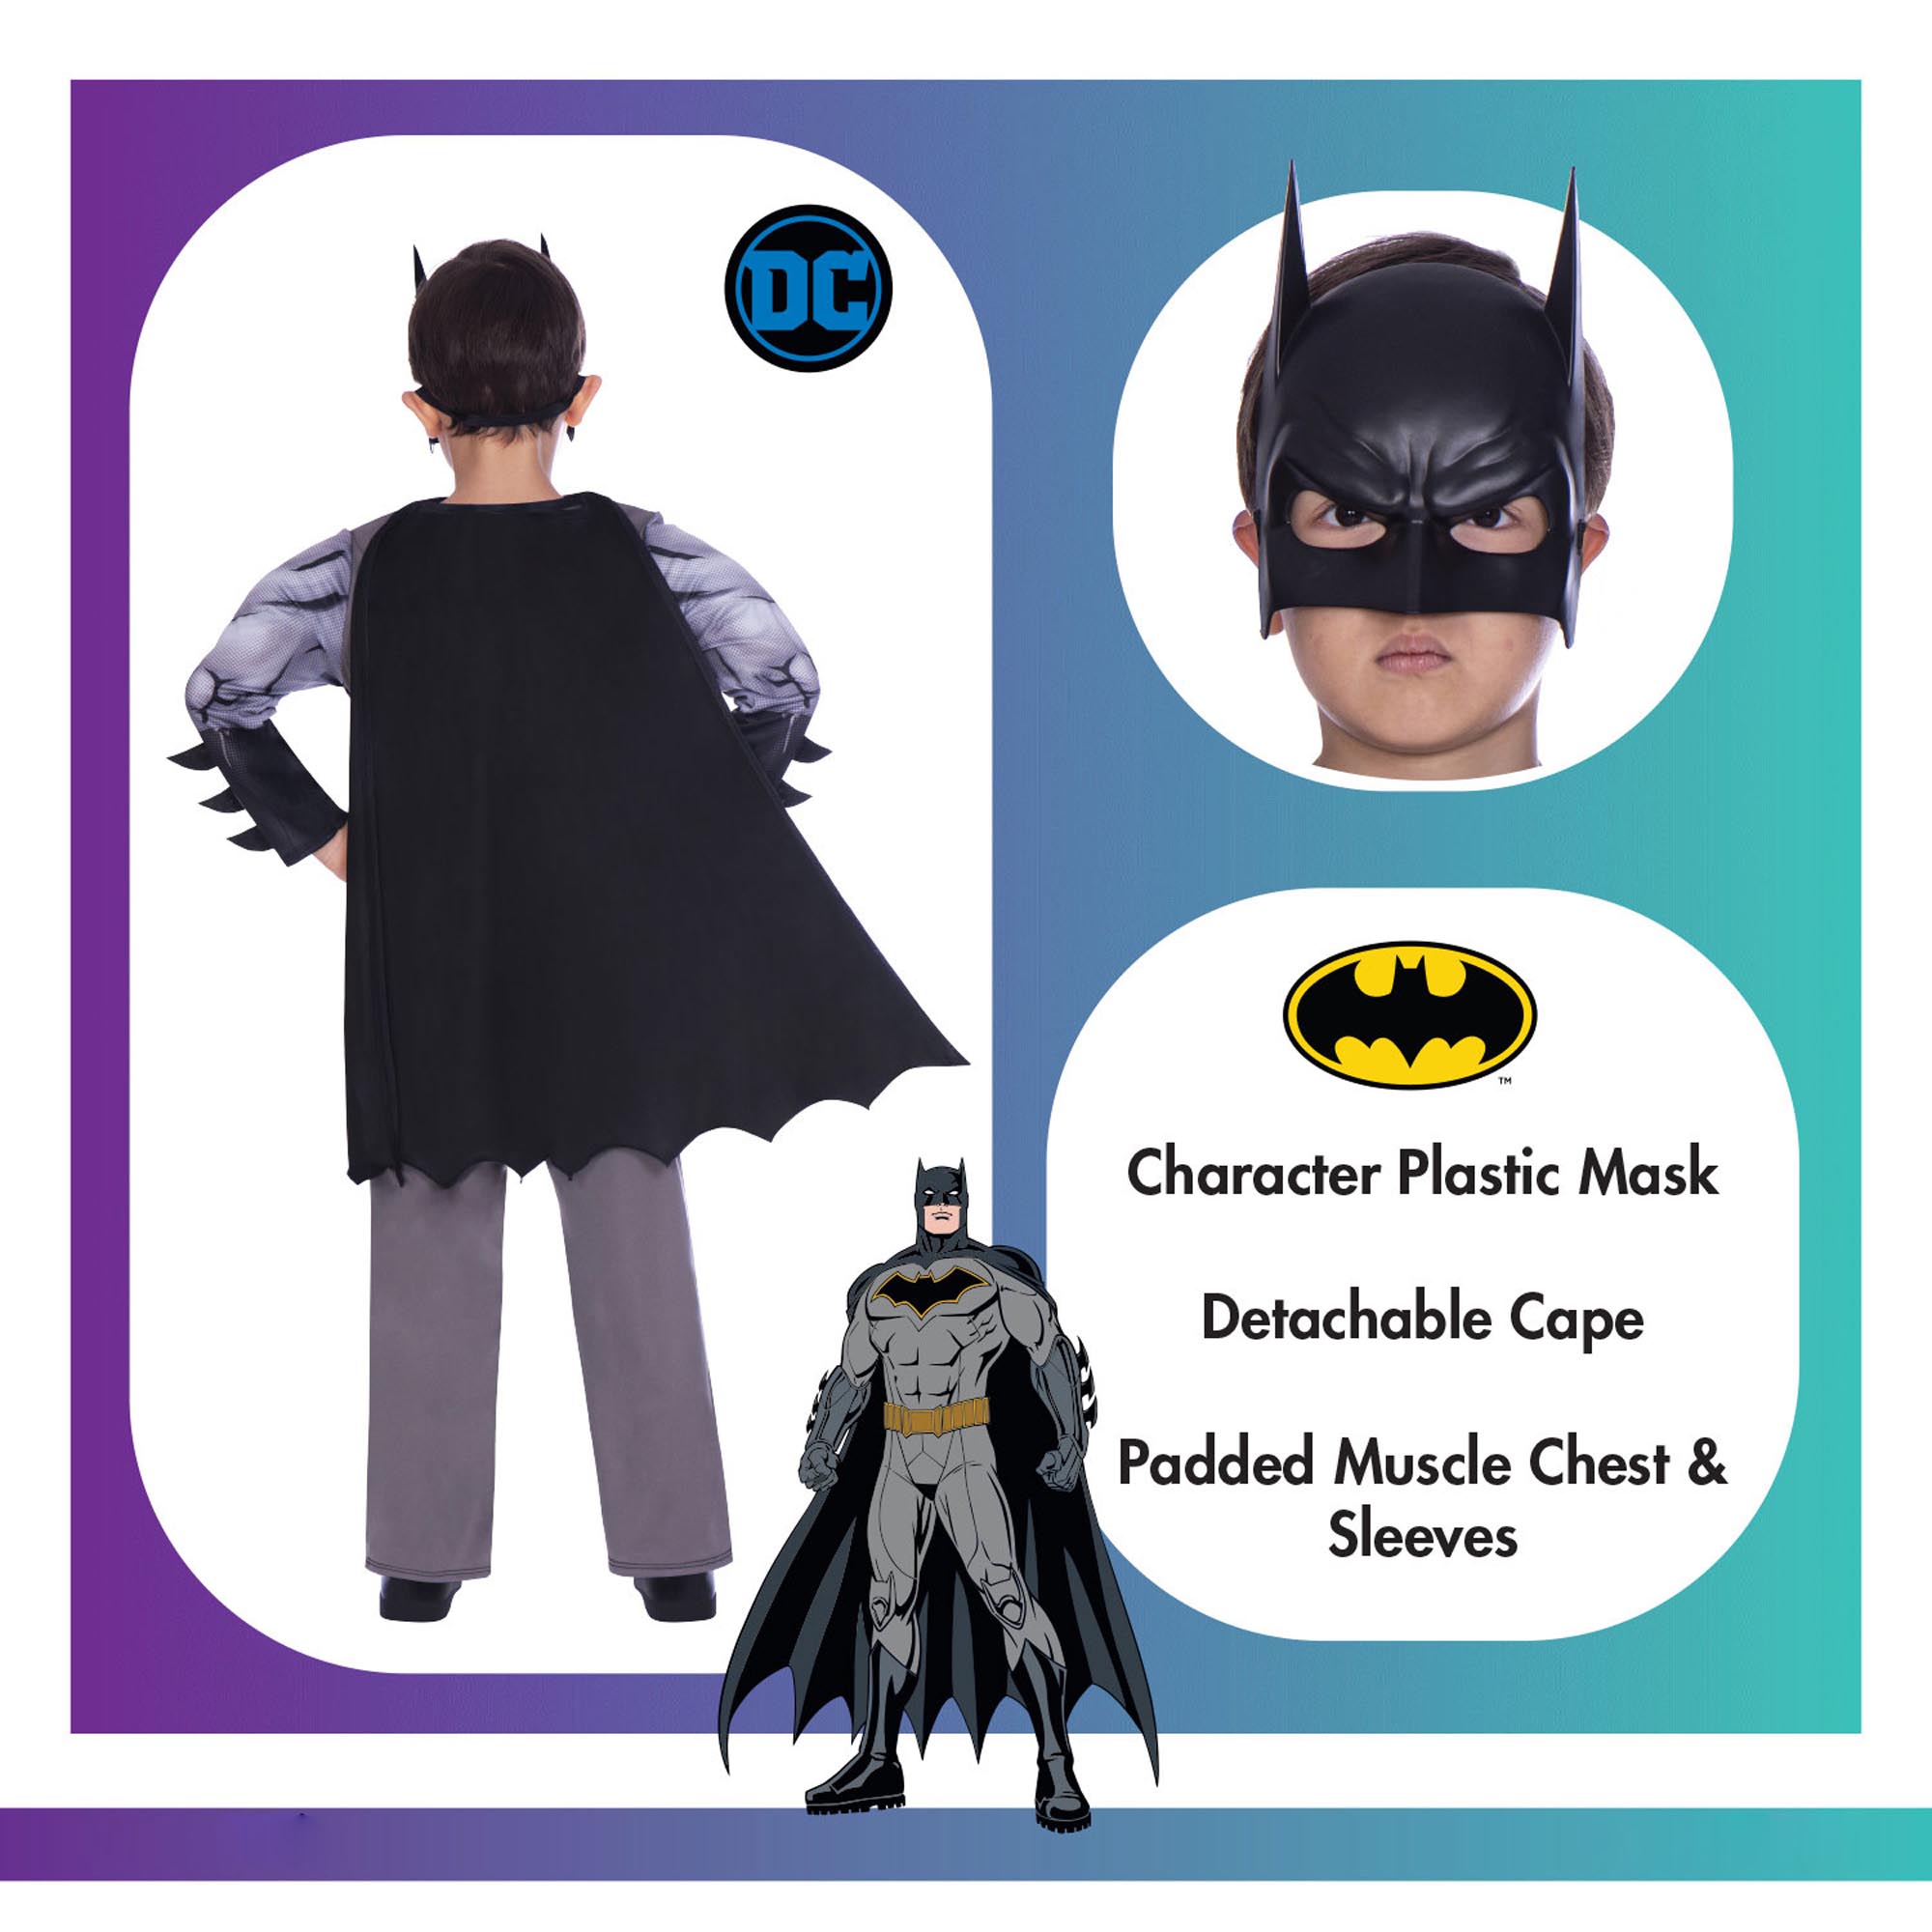 Official Batman Classic Children's Fancy Dress Costume